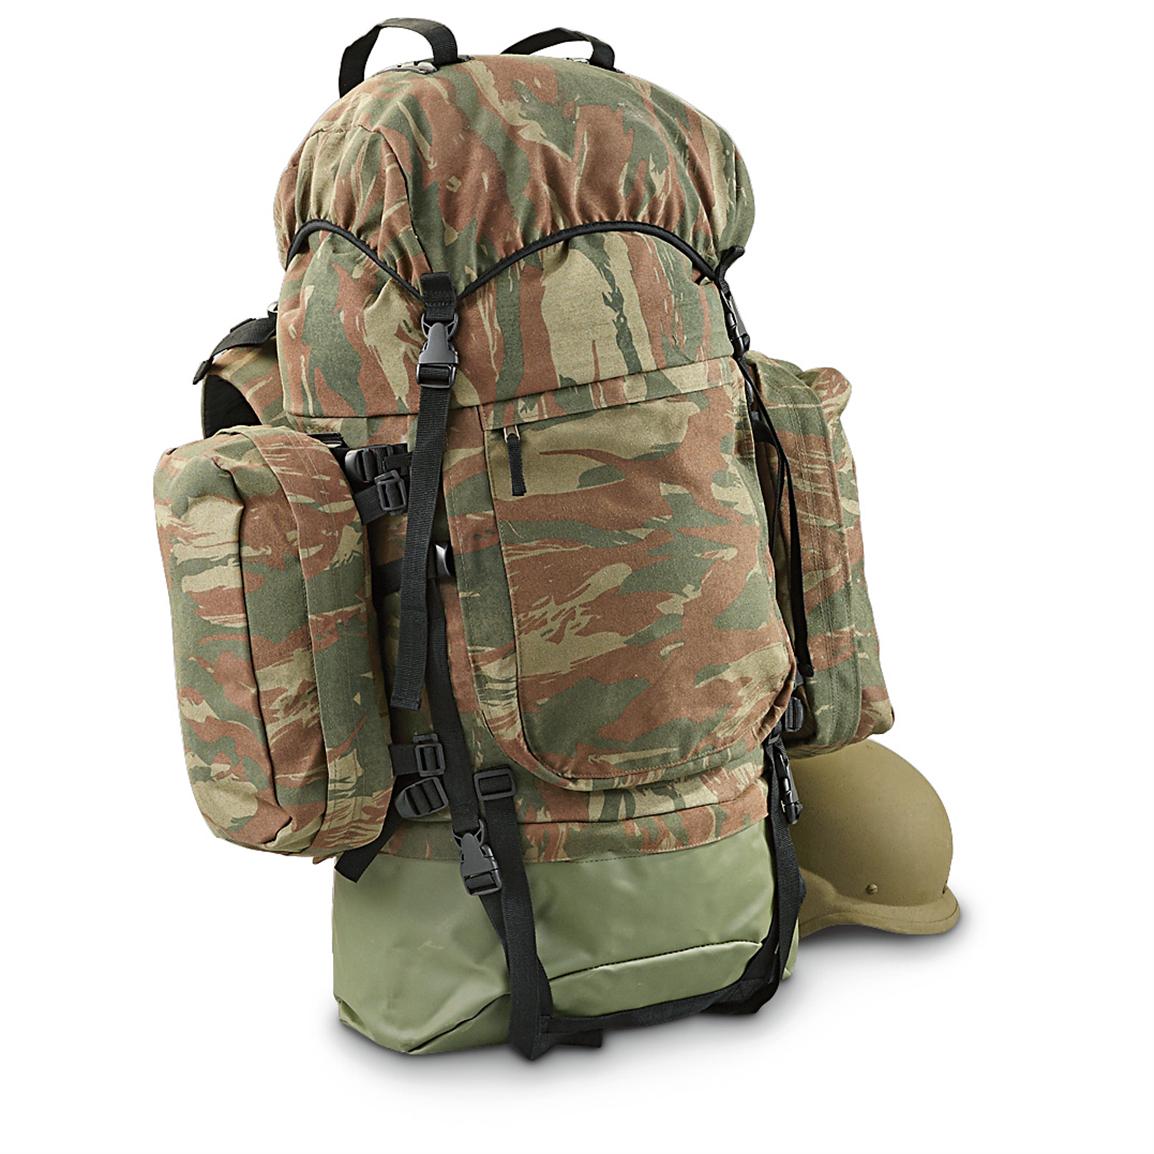 Extra-large Military-style Rucksack, Mediterranean Camo - 301106, Rucksacks & Backpacks at 